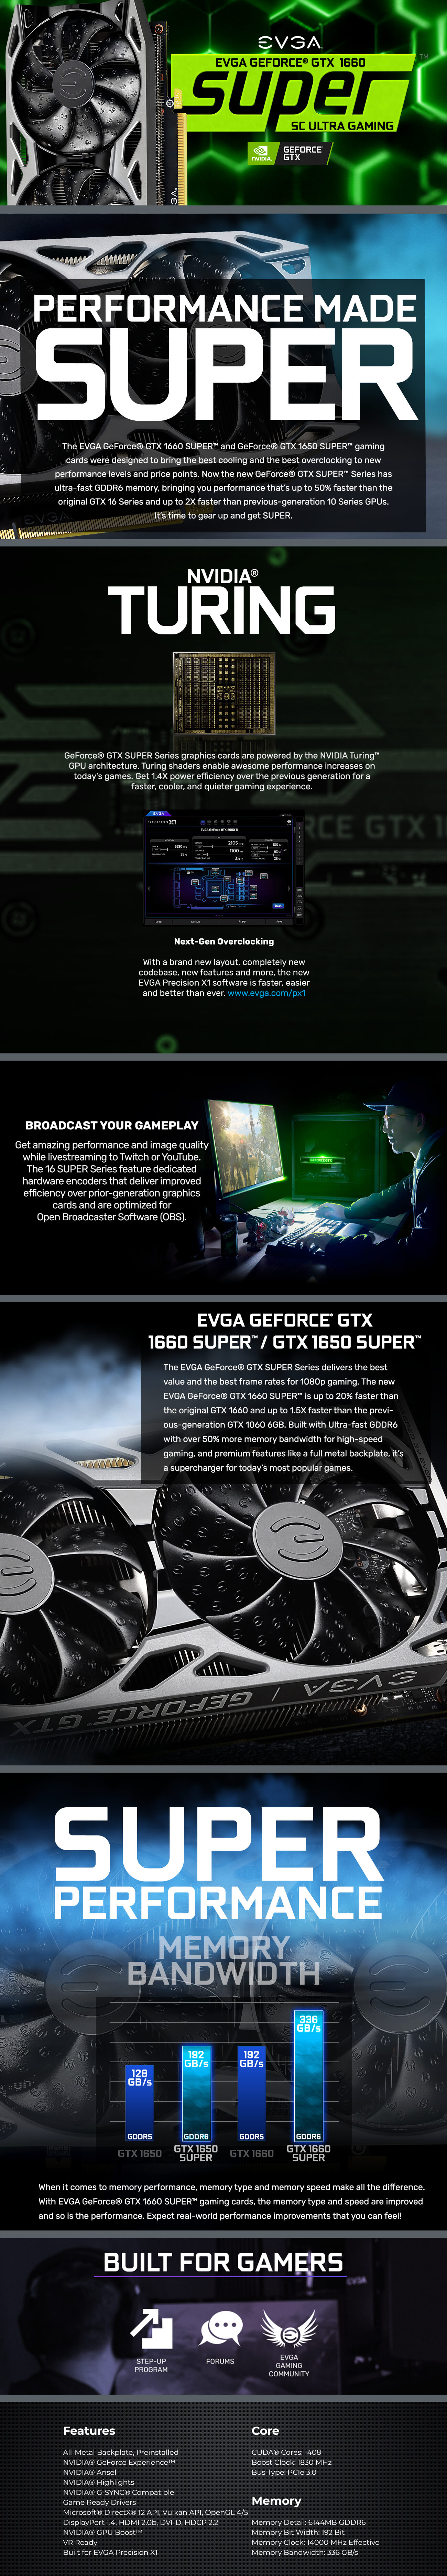 EVGA GeForce GTX 1660 SUPER SC ULTRA GAMING, 06G-P4-1068-KR, 6GB GDDR6, Dual Fan, Metal Backplate